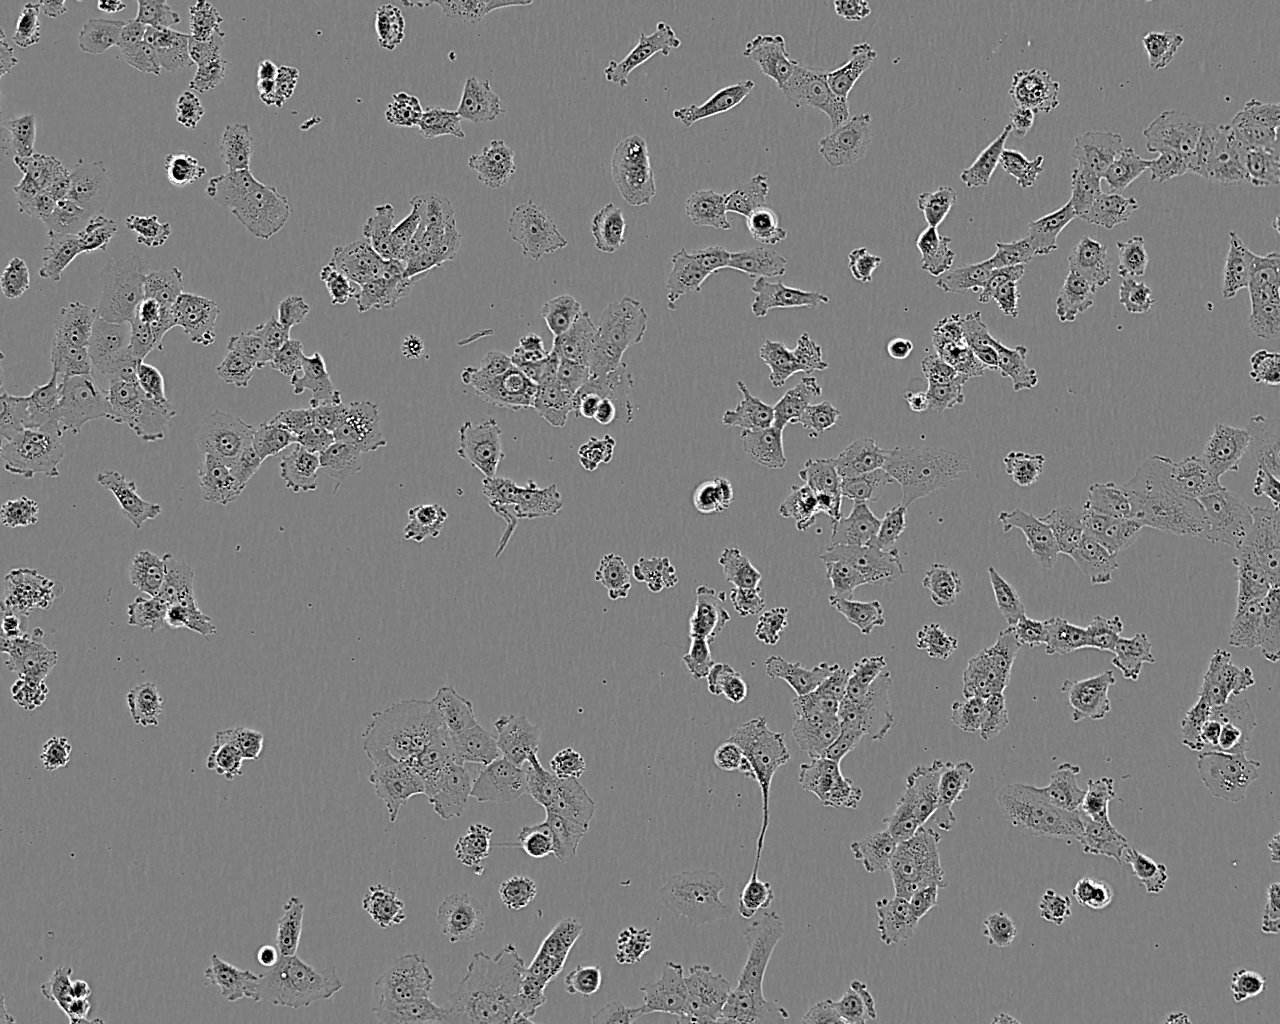 UACC-812 epithelioid cells人乳腺导管瘤细胞系